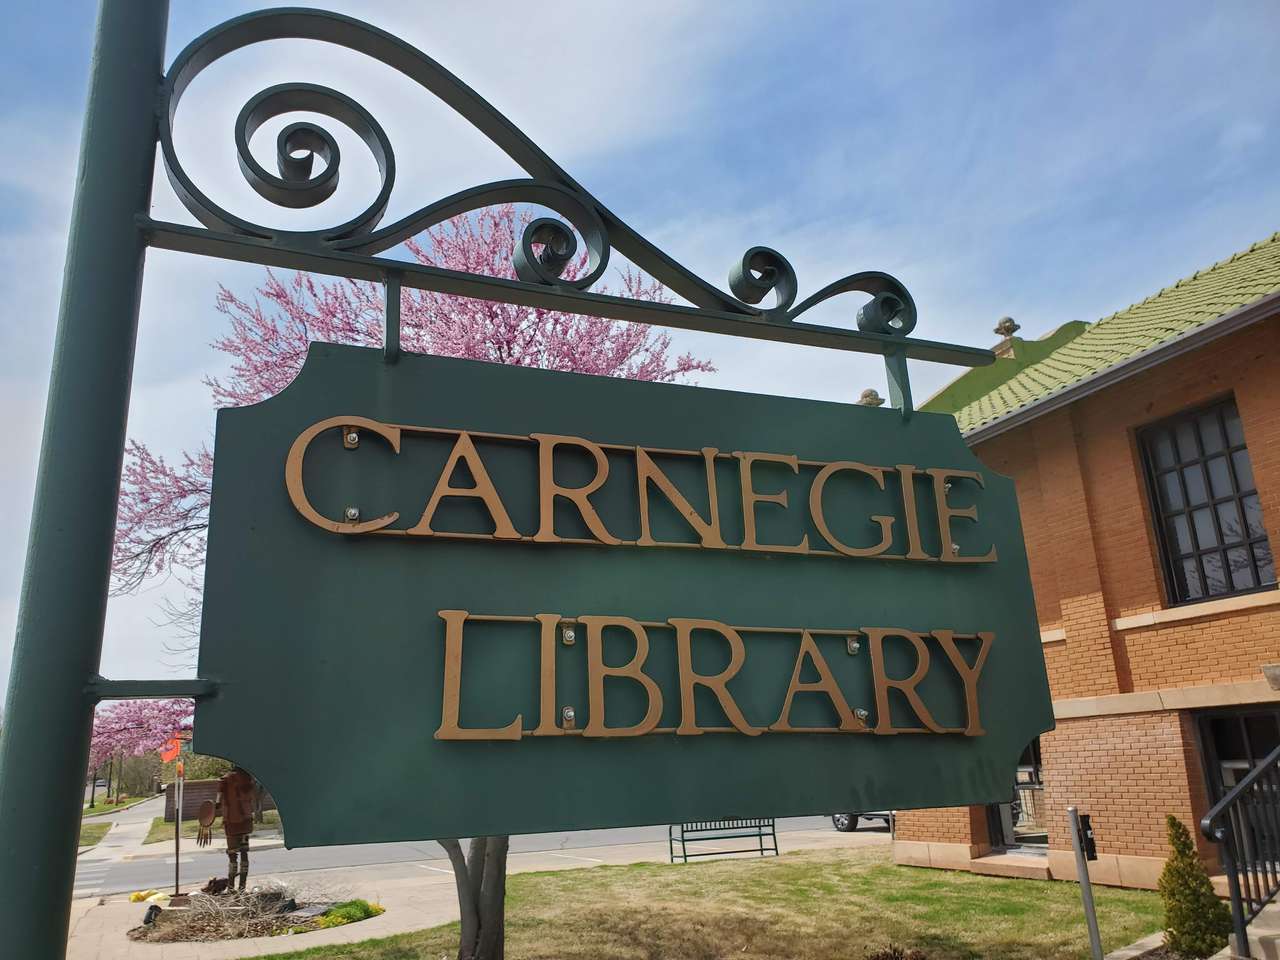 Biblioteca Carnegie. puzzle online a partir de fotografia